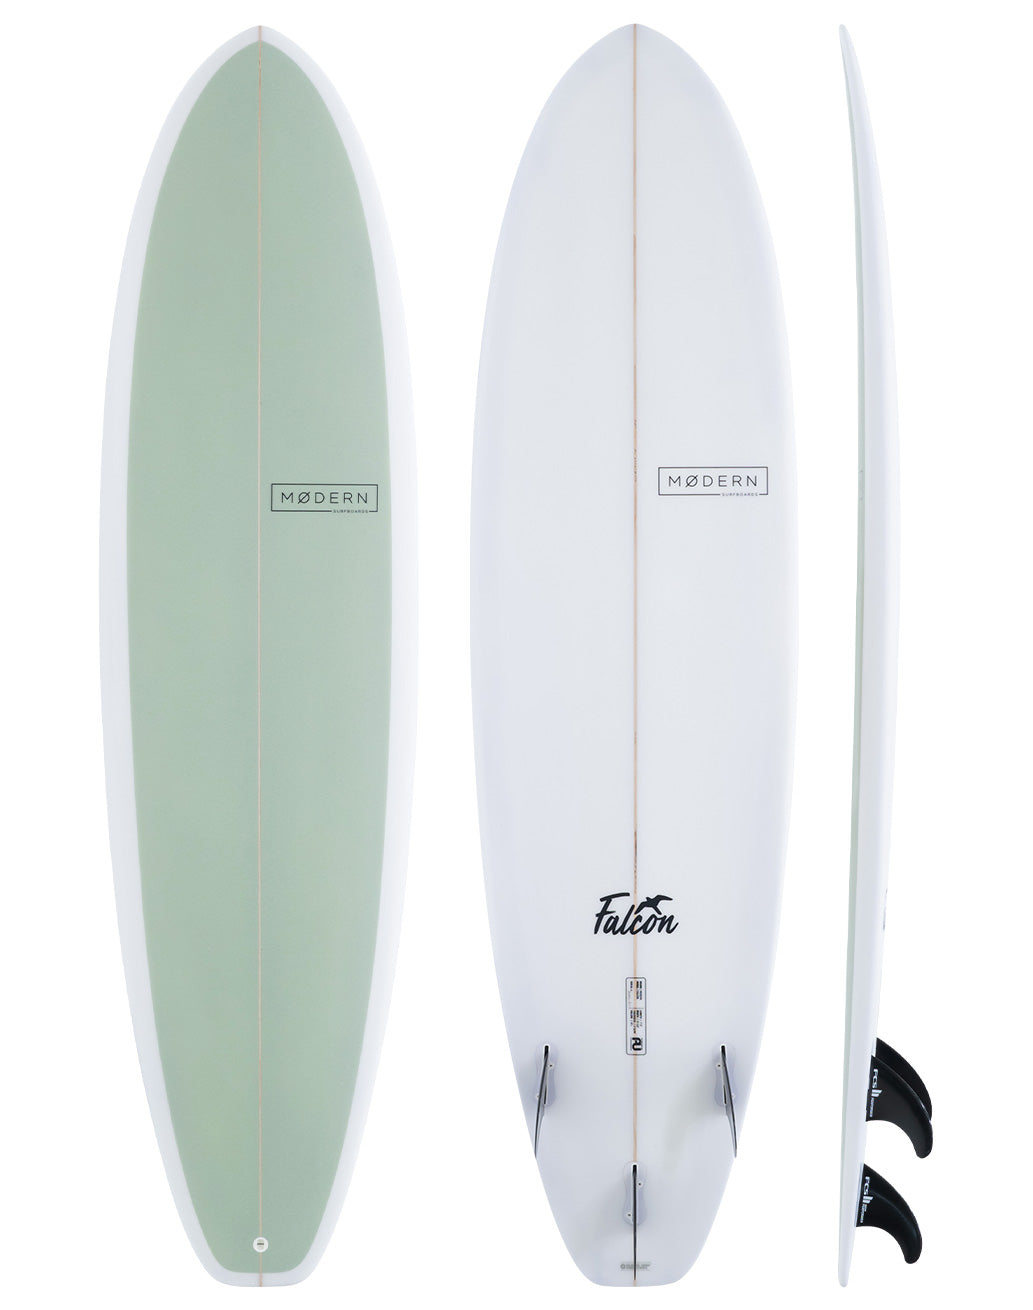 Modern Surfboard Falcon, mid length surfboard - olive green